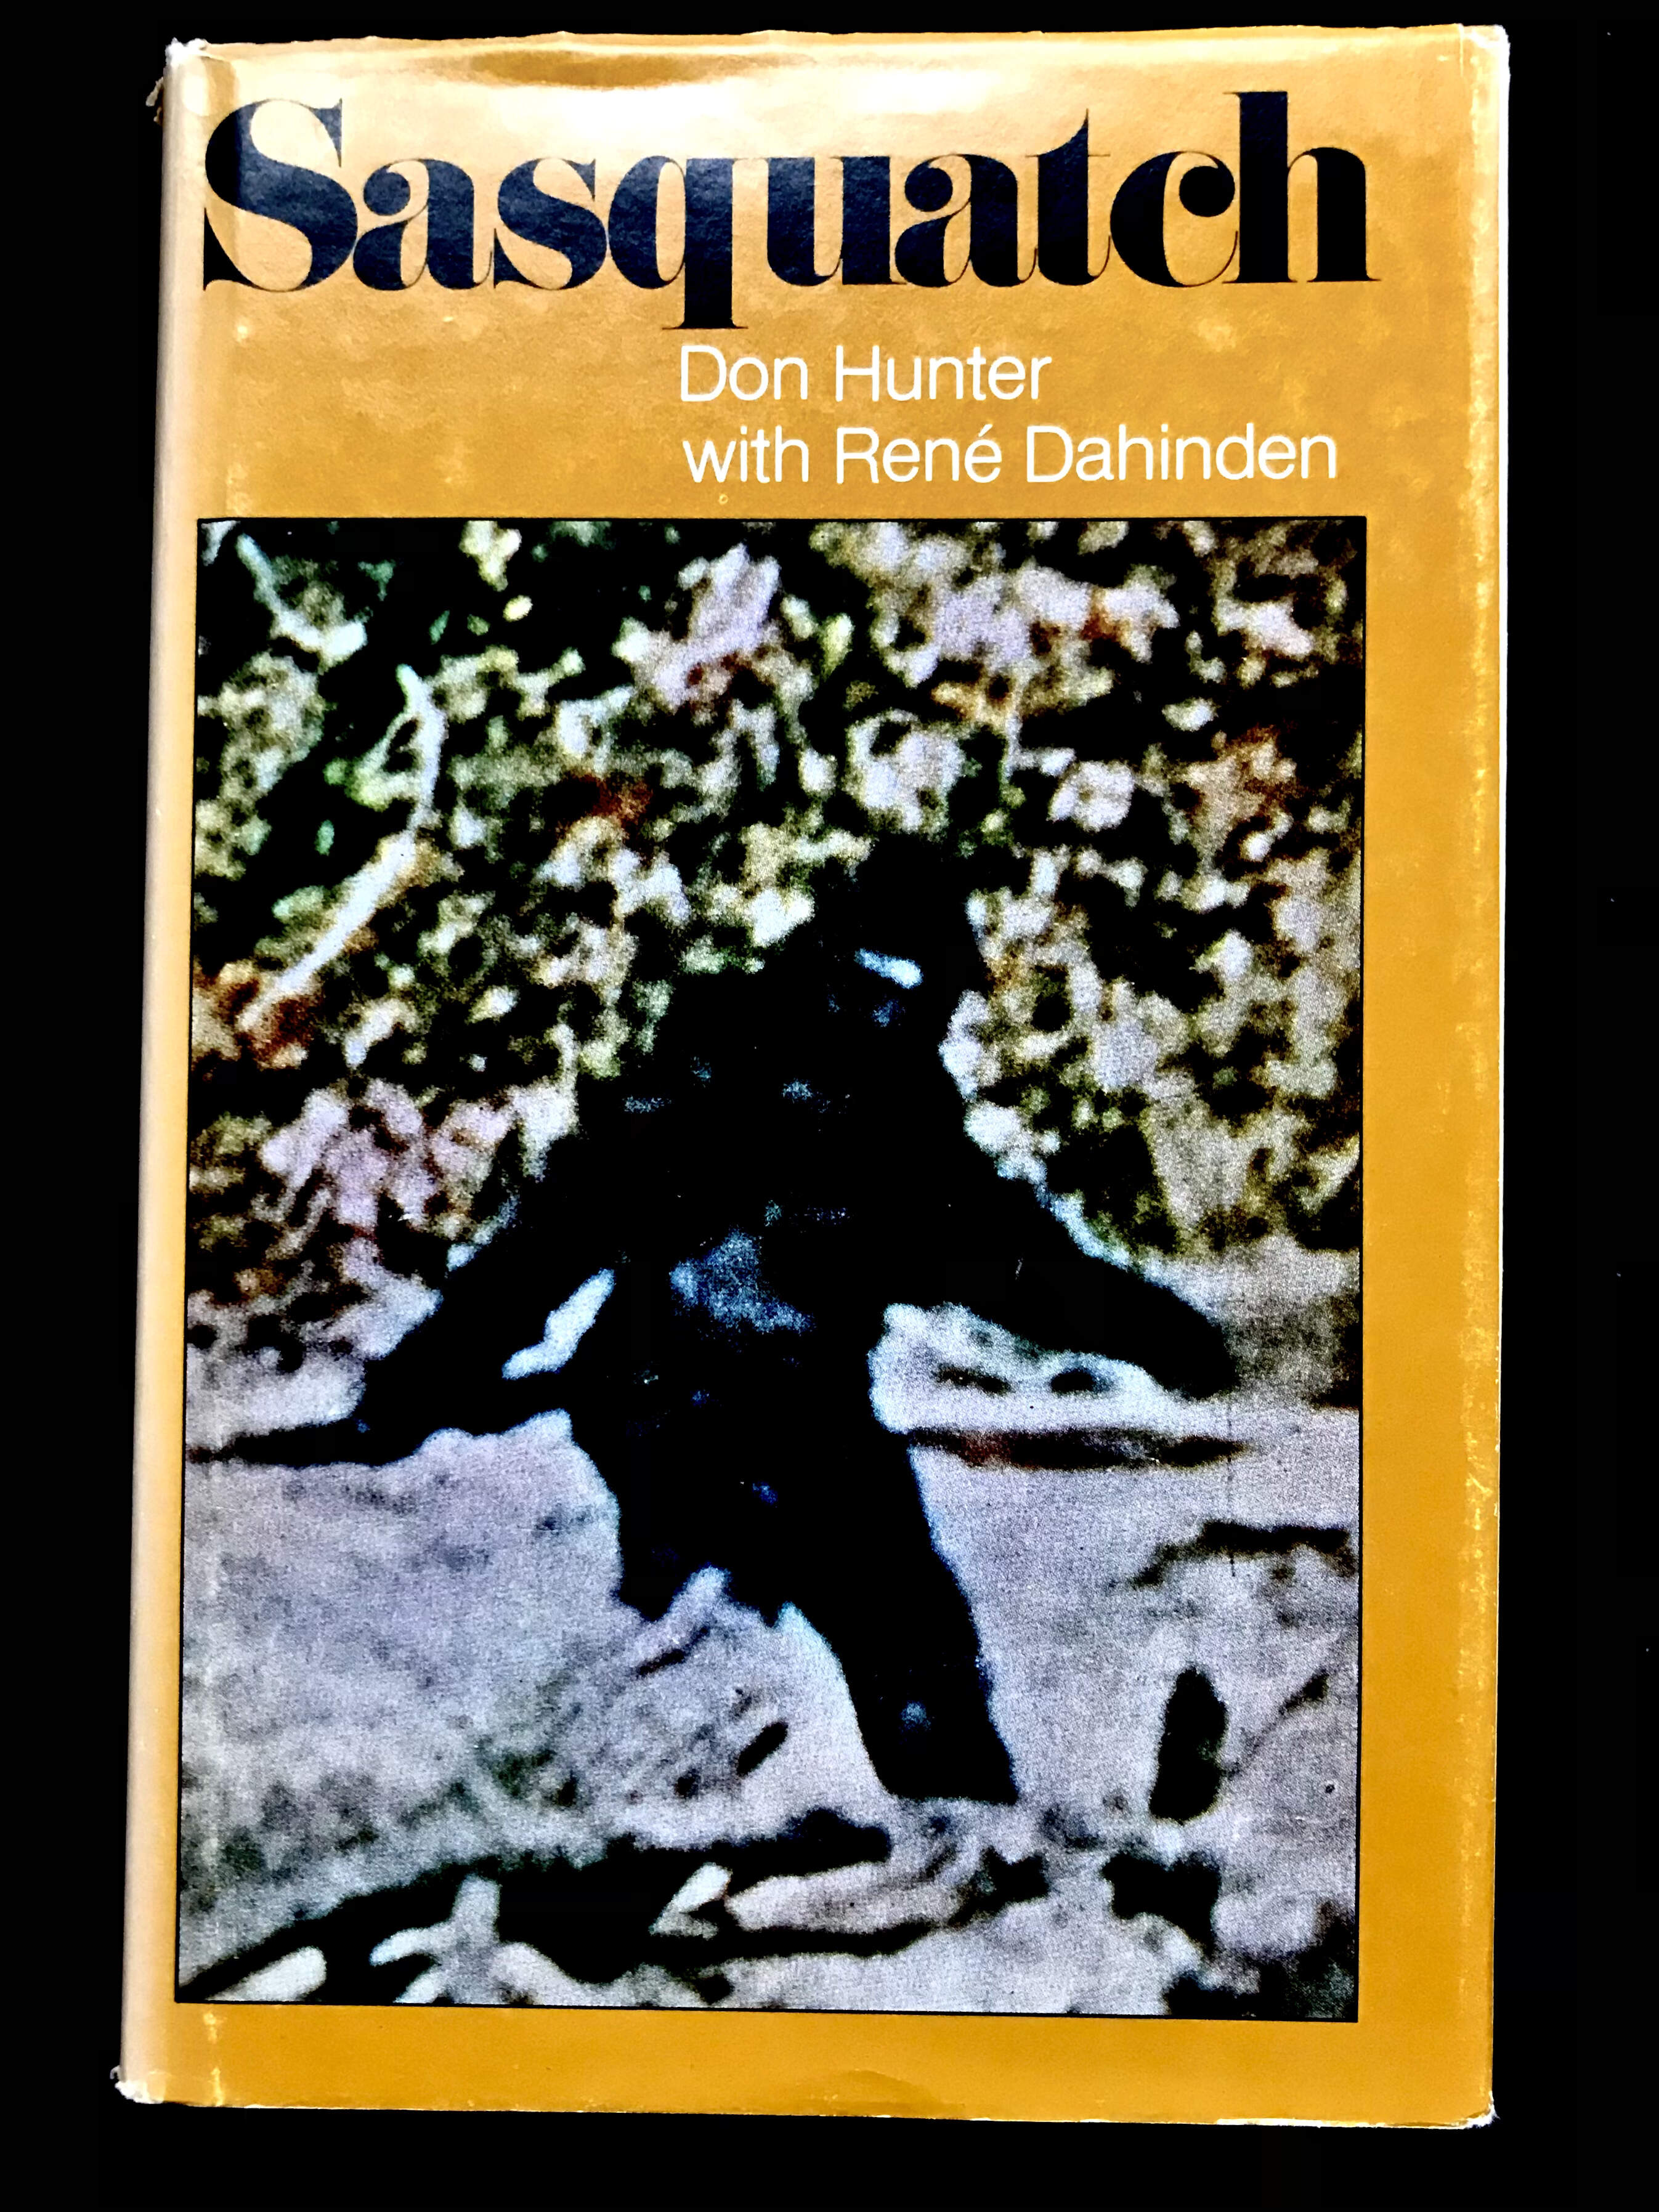 Sasquatch by Don Hunter, with René Dahinden